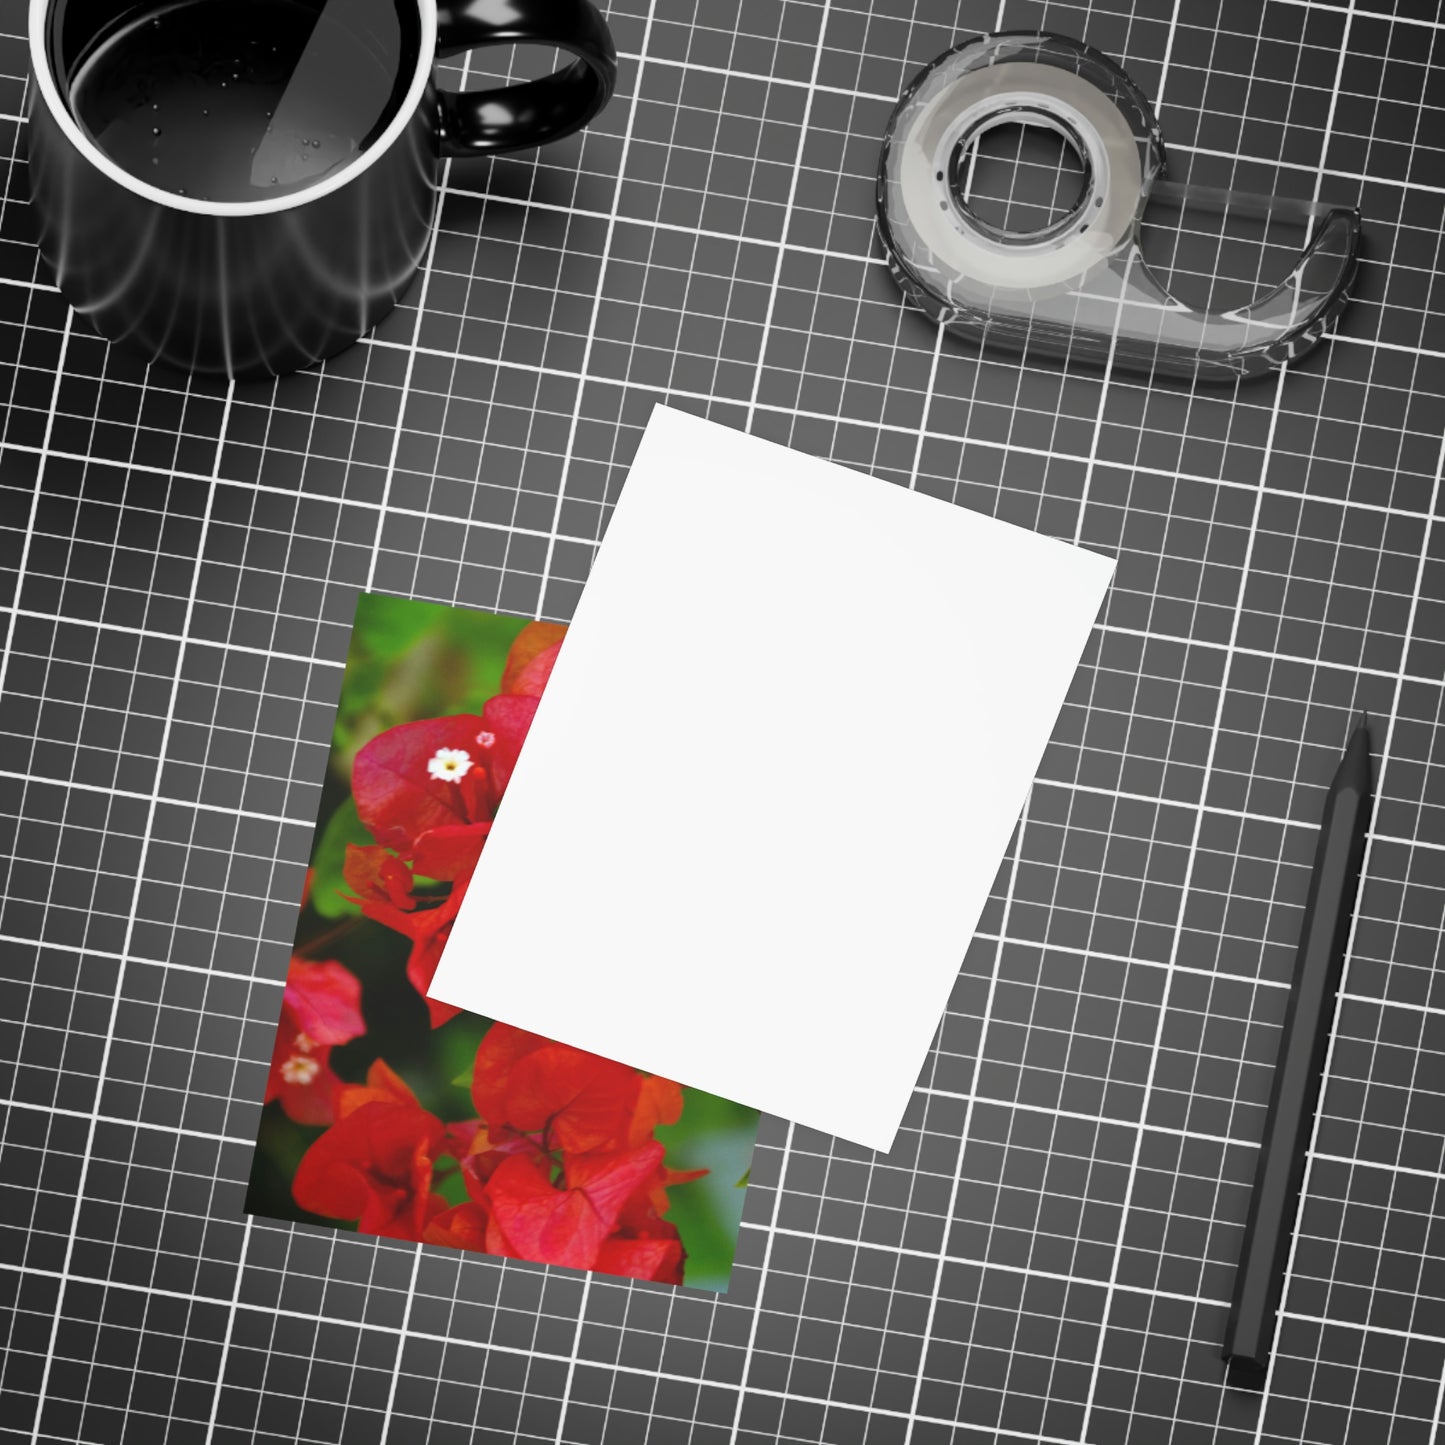 Flowers 27 Greeting Card Bundles (envelopes not included)